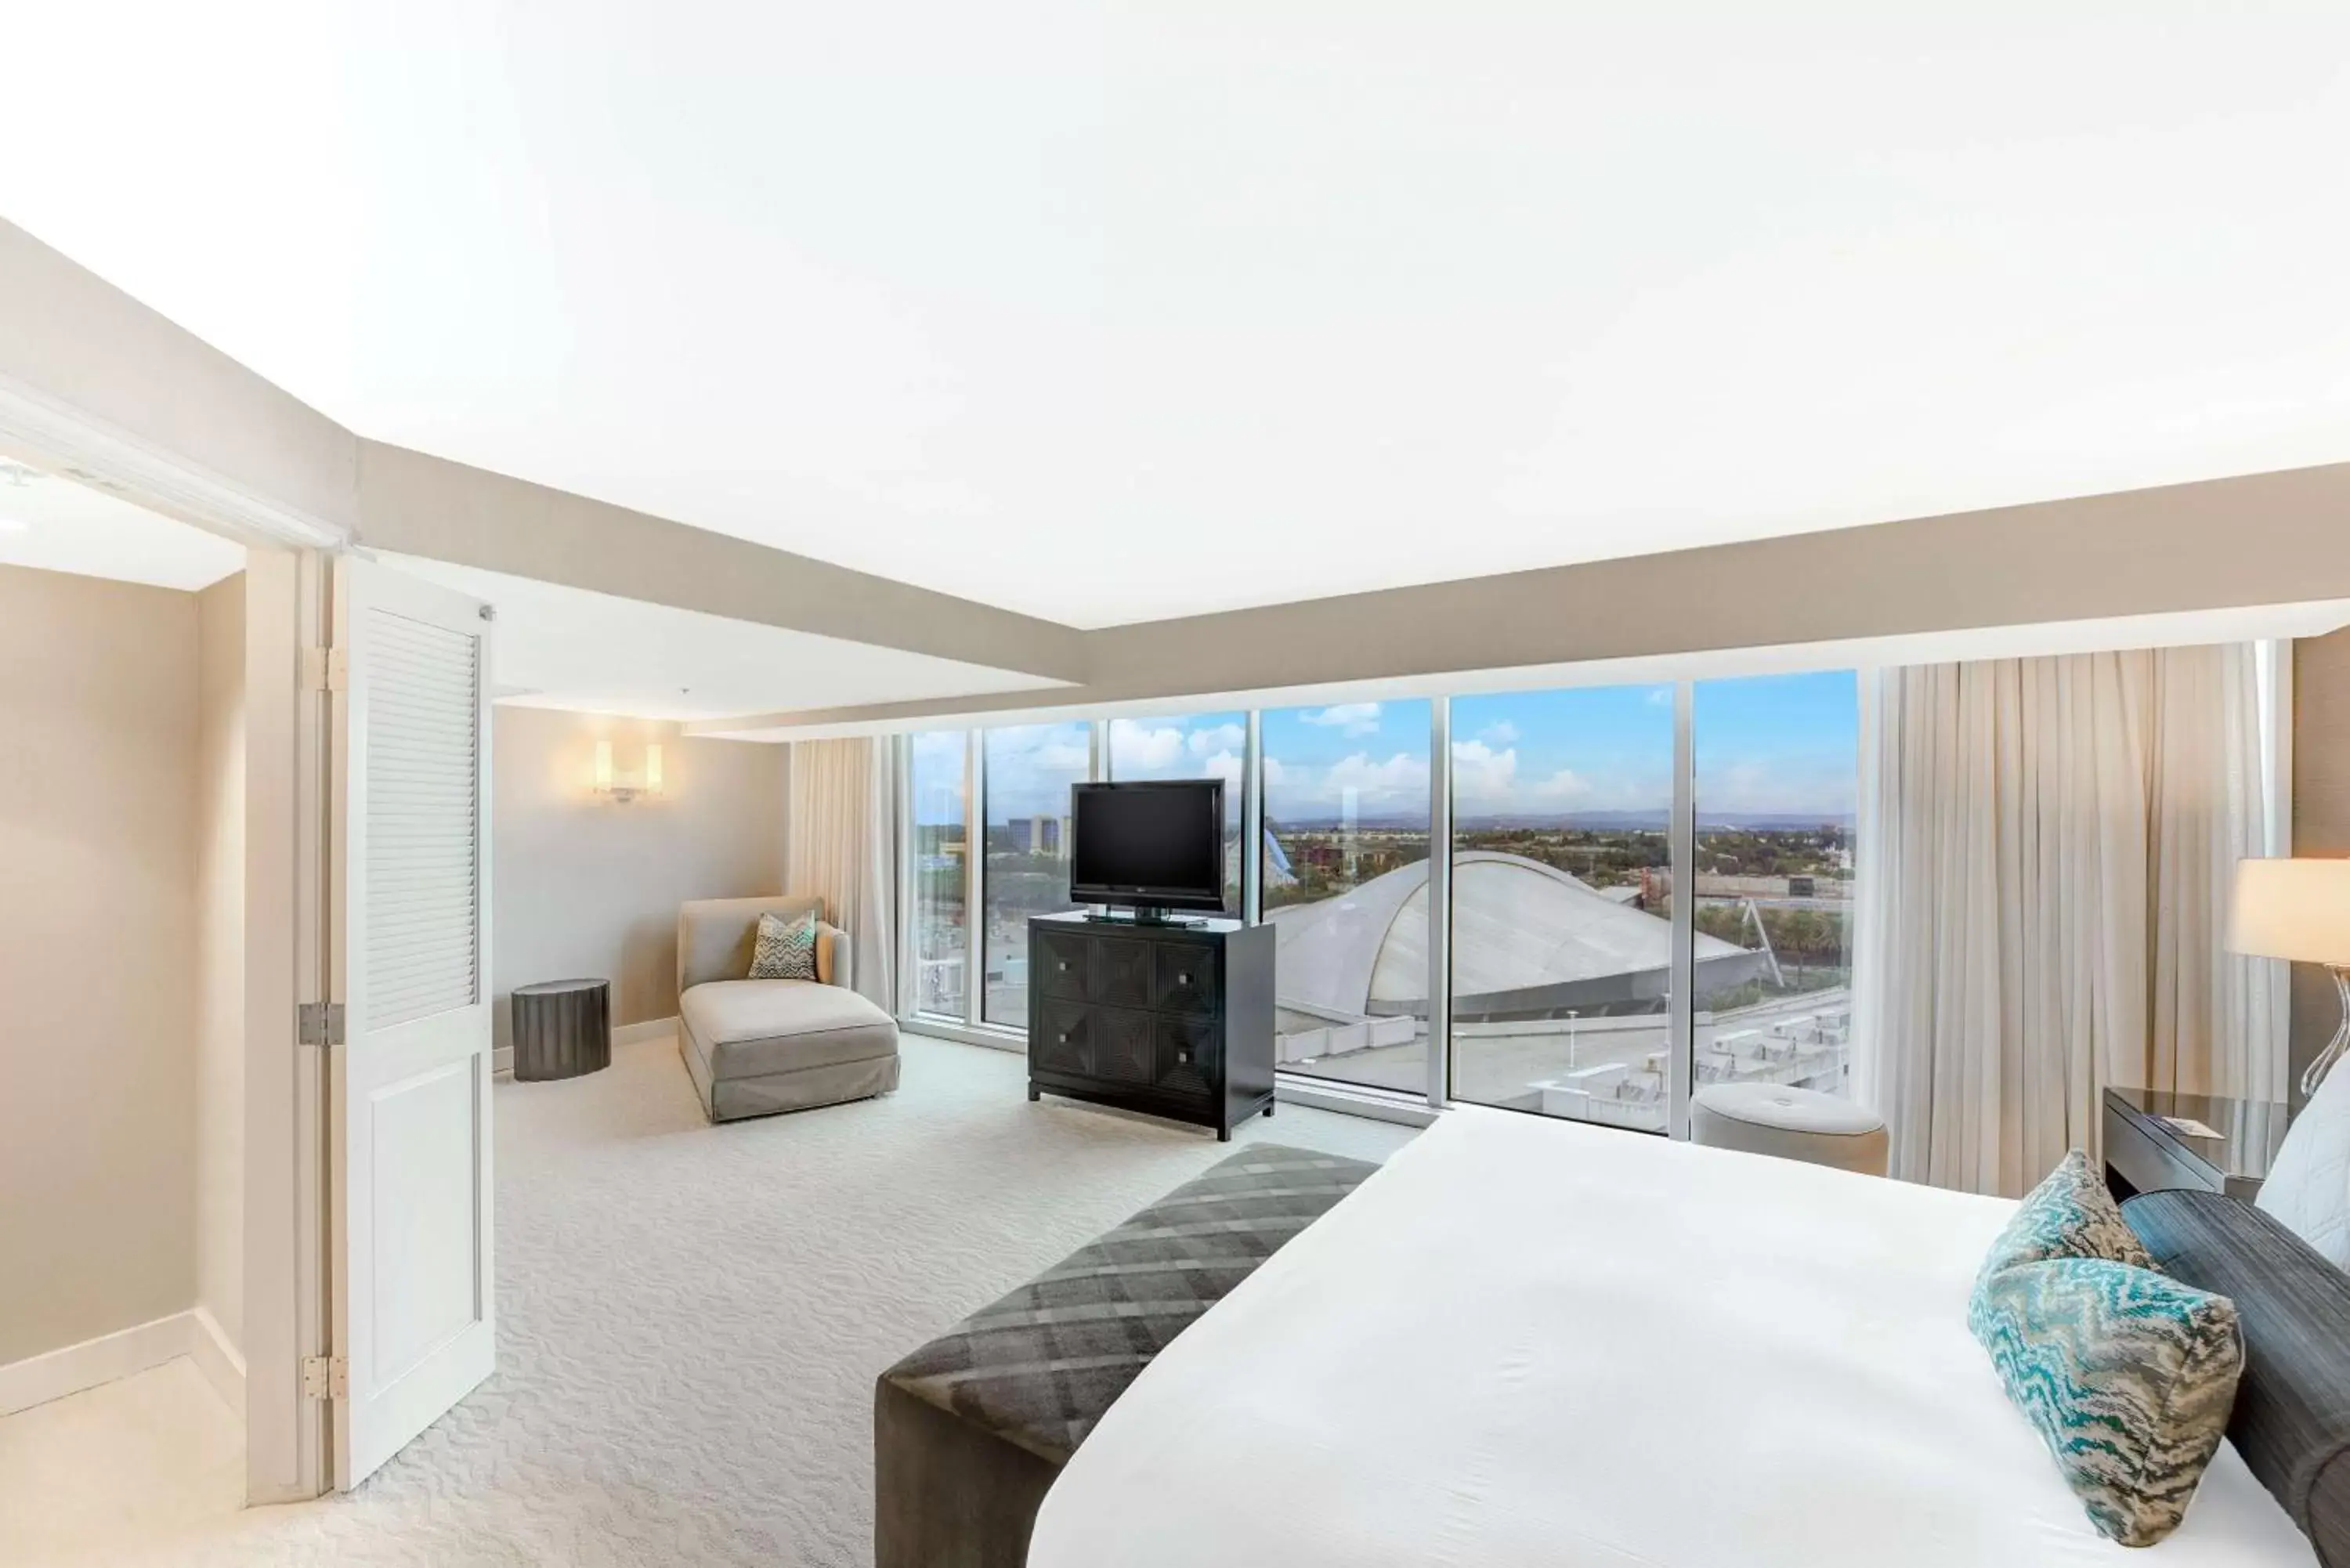 Bedroom in Hilton Anaheim